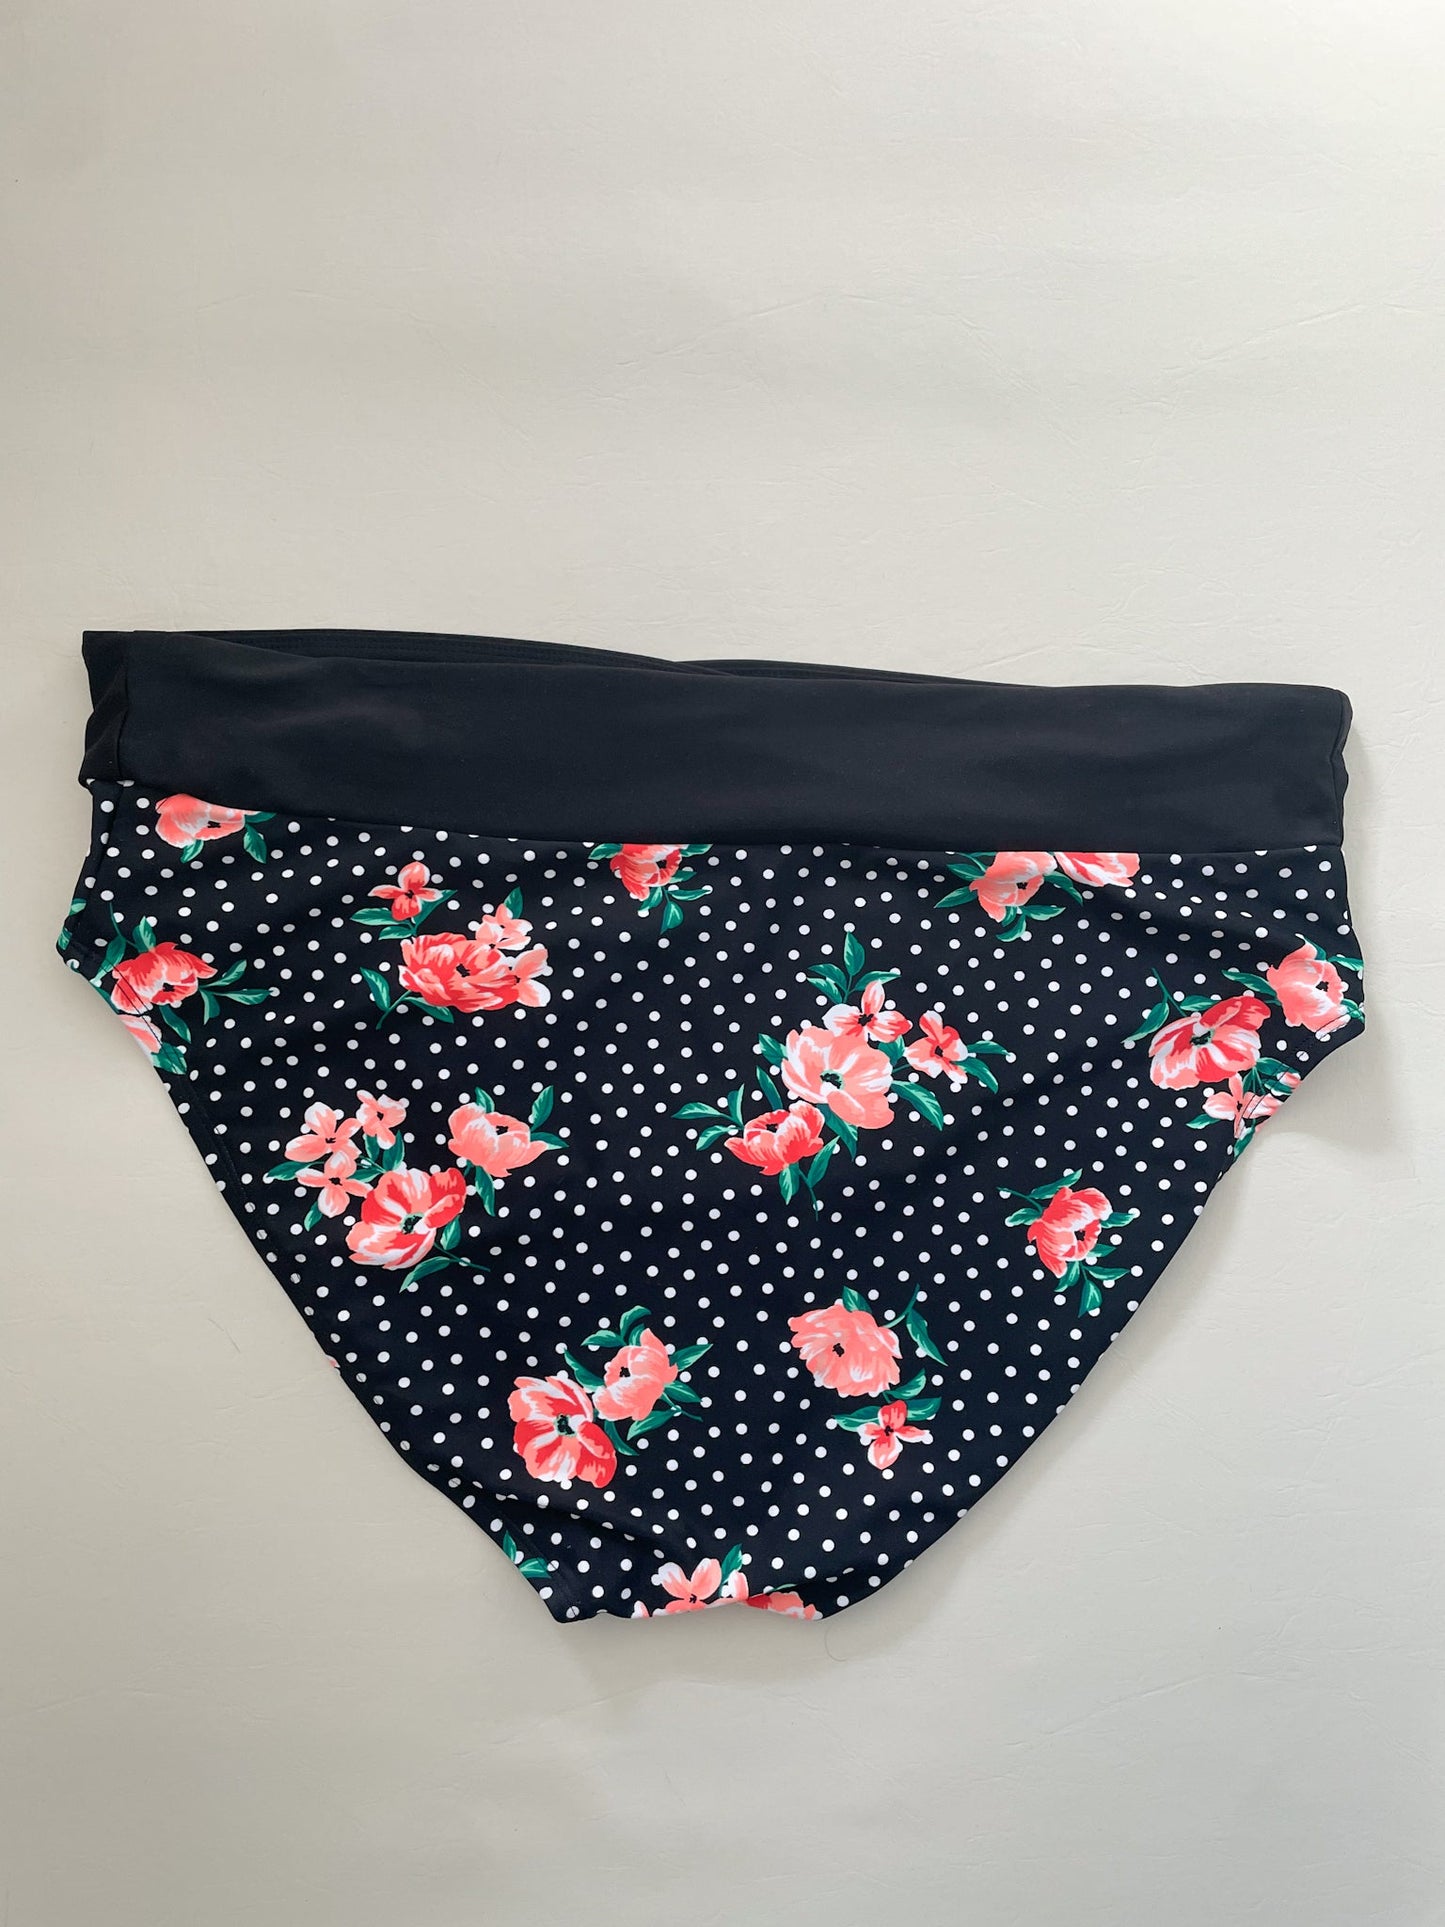 Black Floral High Waisted Bikini Bottoms NWOT - 3XL